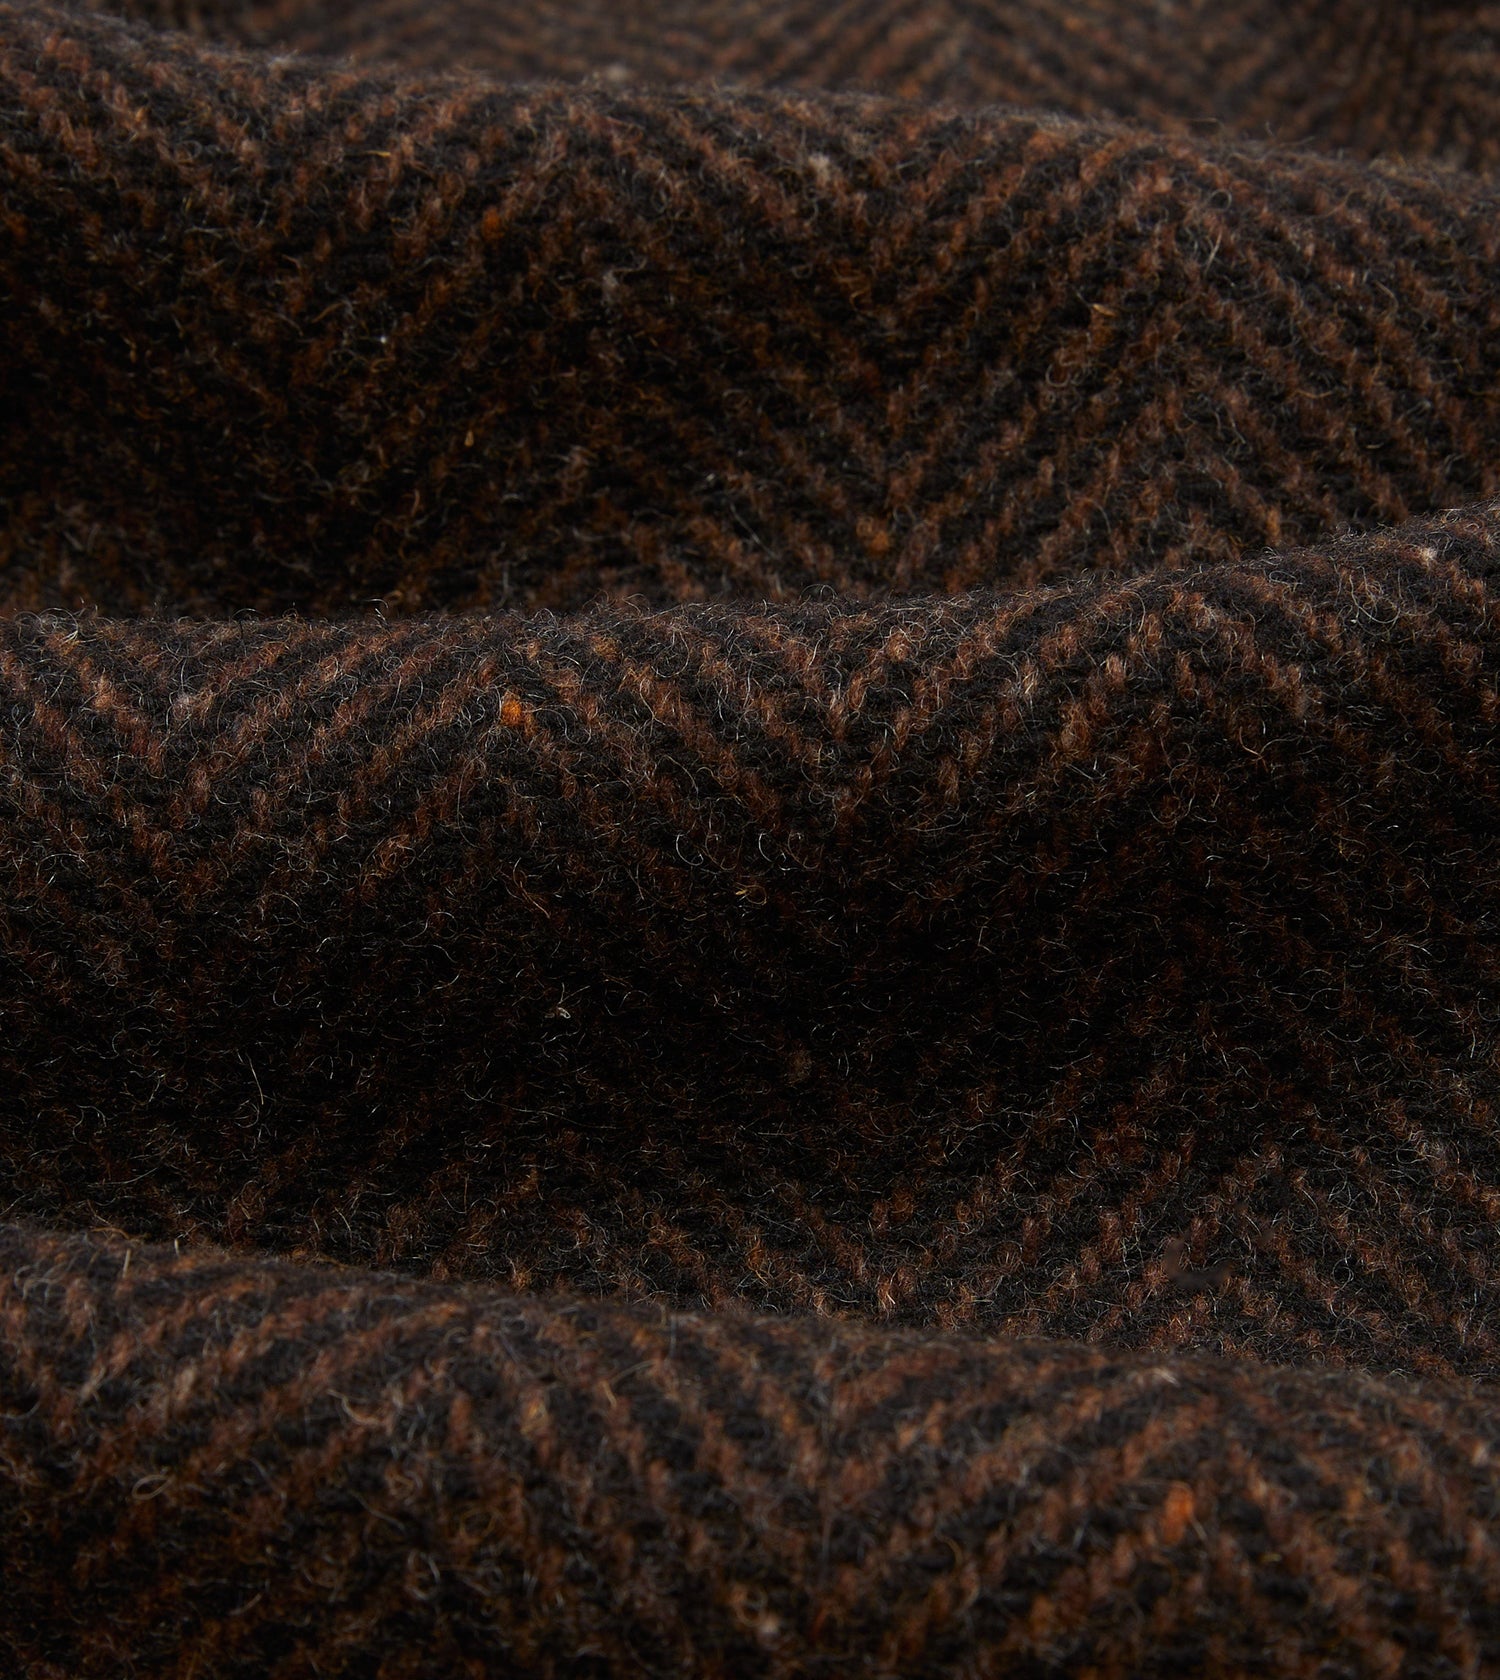 Brown Herringbone Wool Raglan Coat